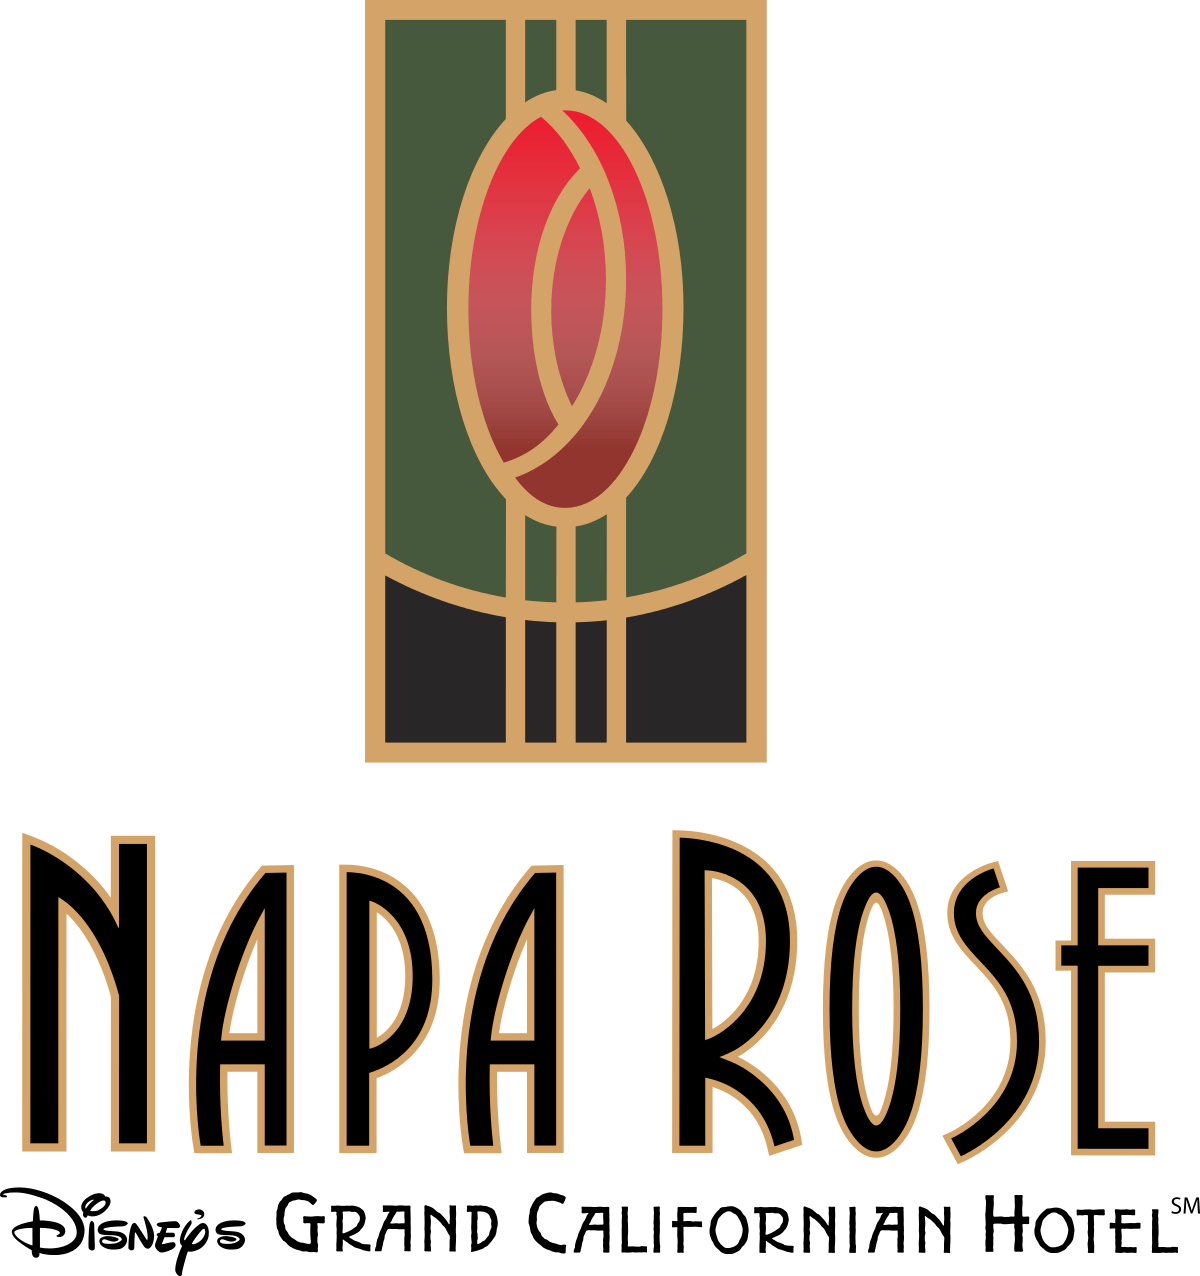 Restaurant Oval Logo - Napa Rose